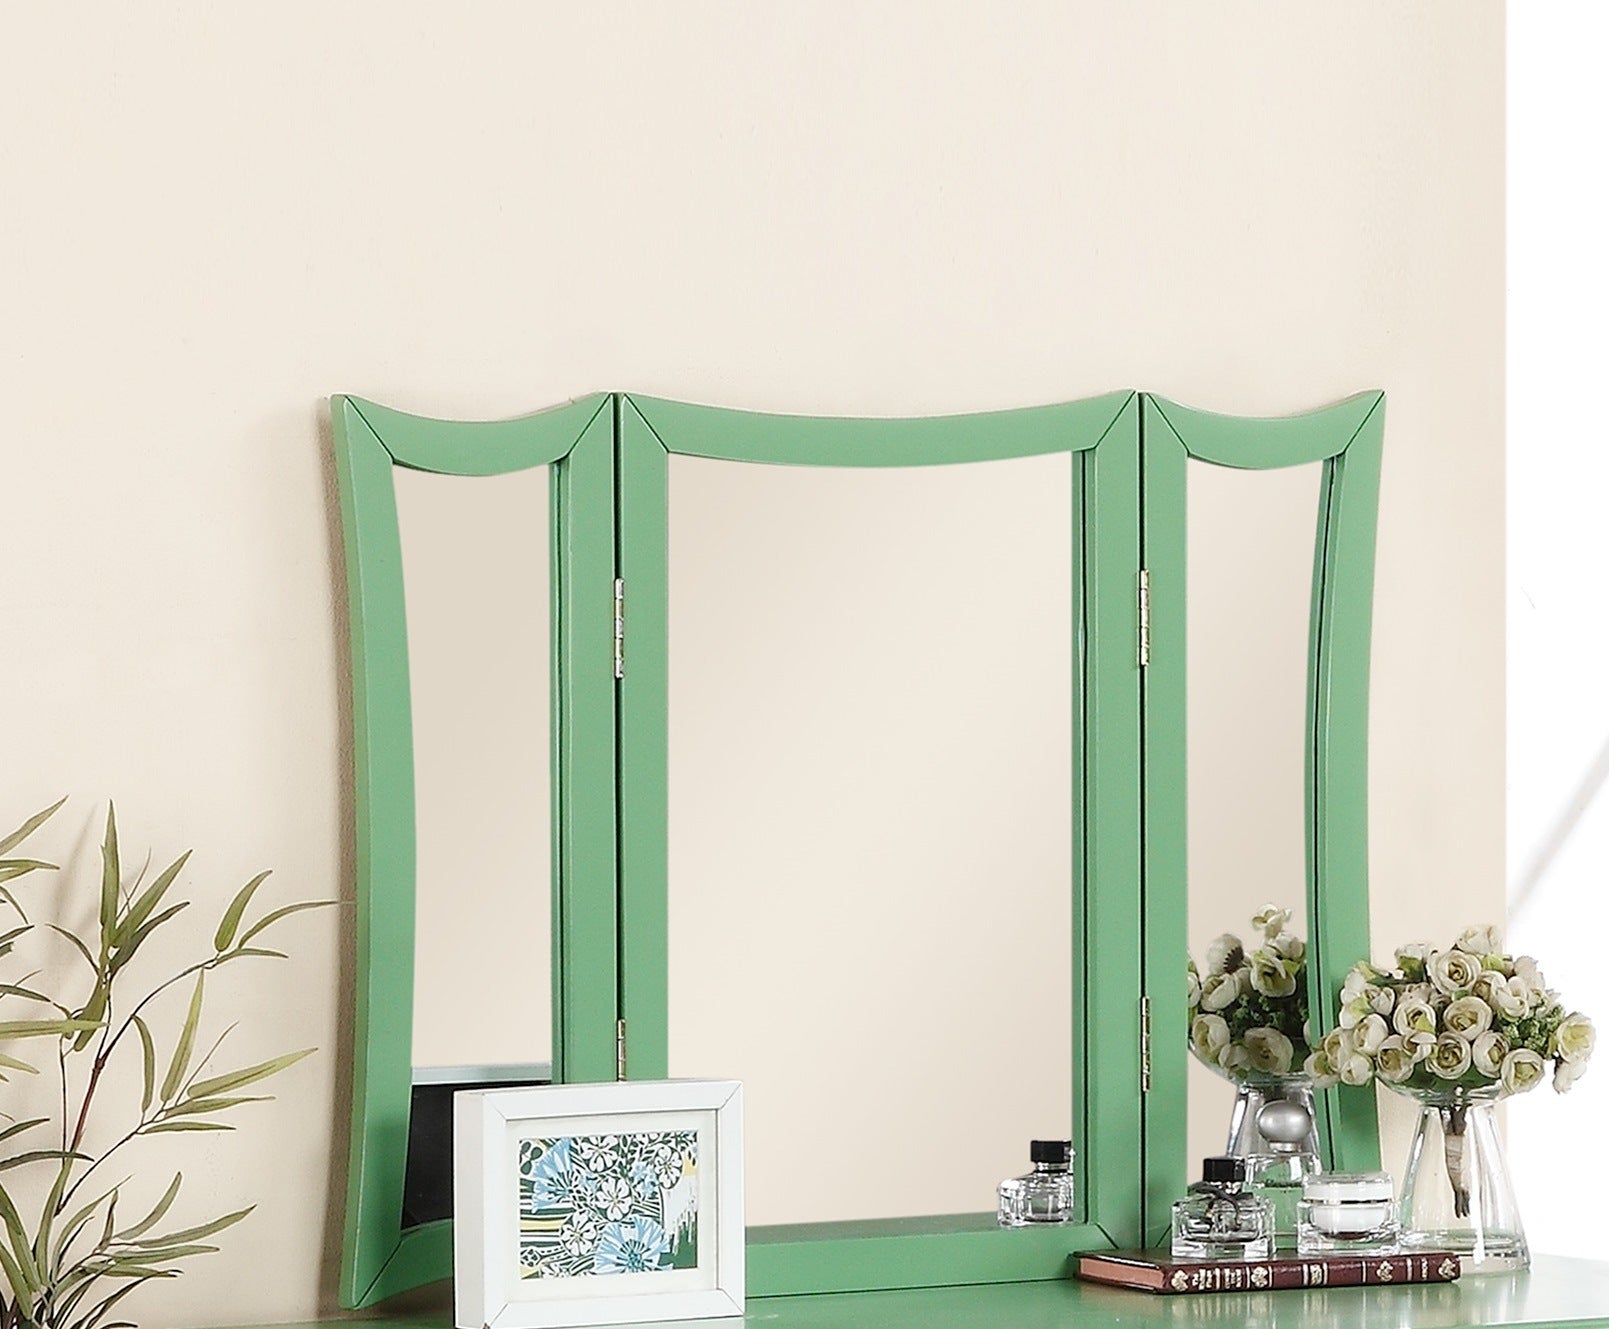 Unique Modern Bedroom Vanity Set w Stool Foldable Mirror Drawers Apple Green Color MDF Veneer 1pc Vanity Furniture - lolaluxeshop